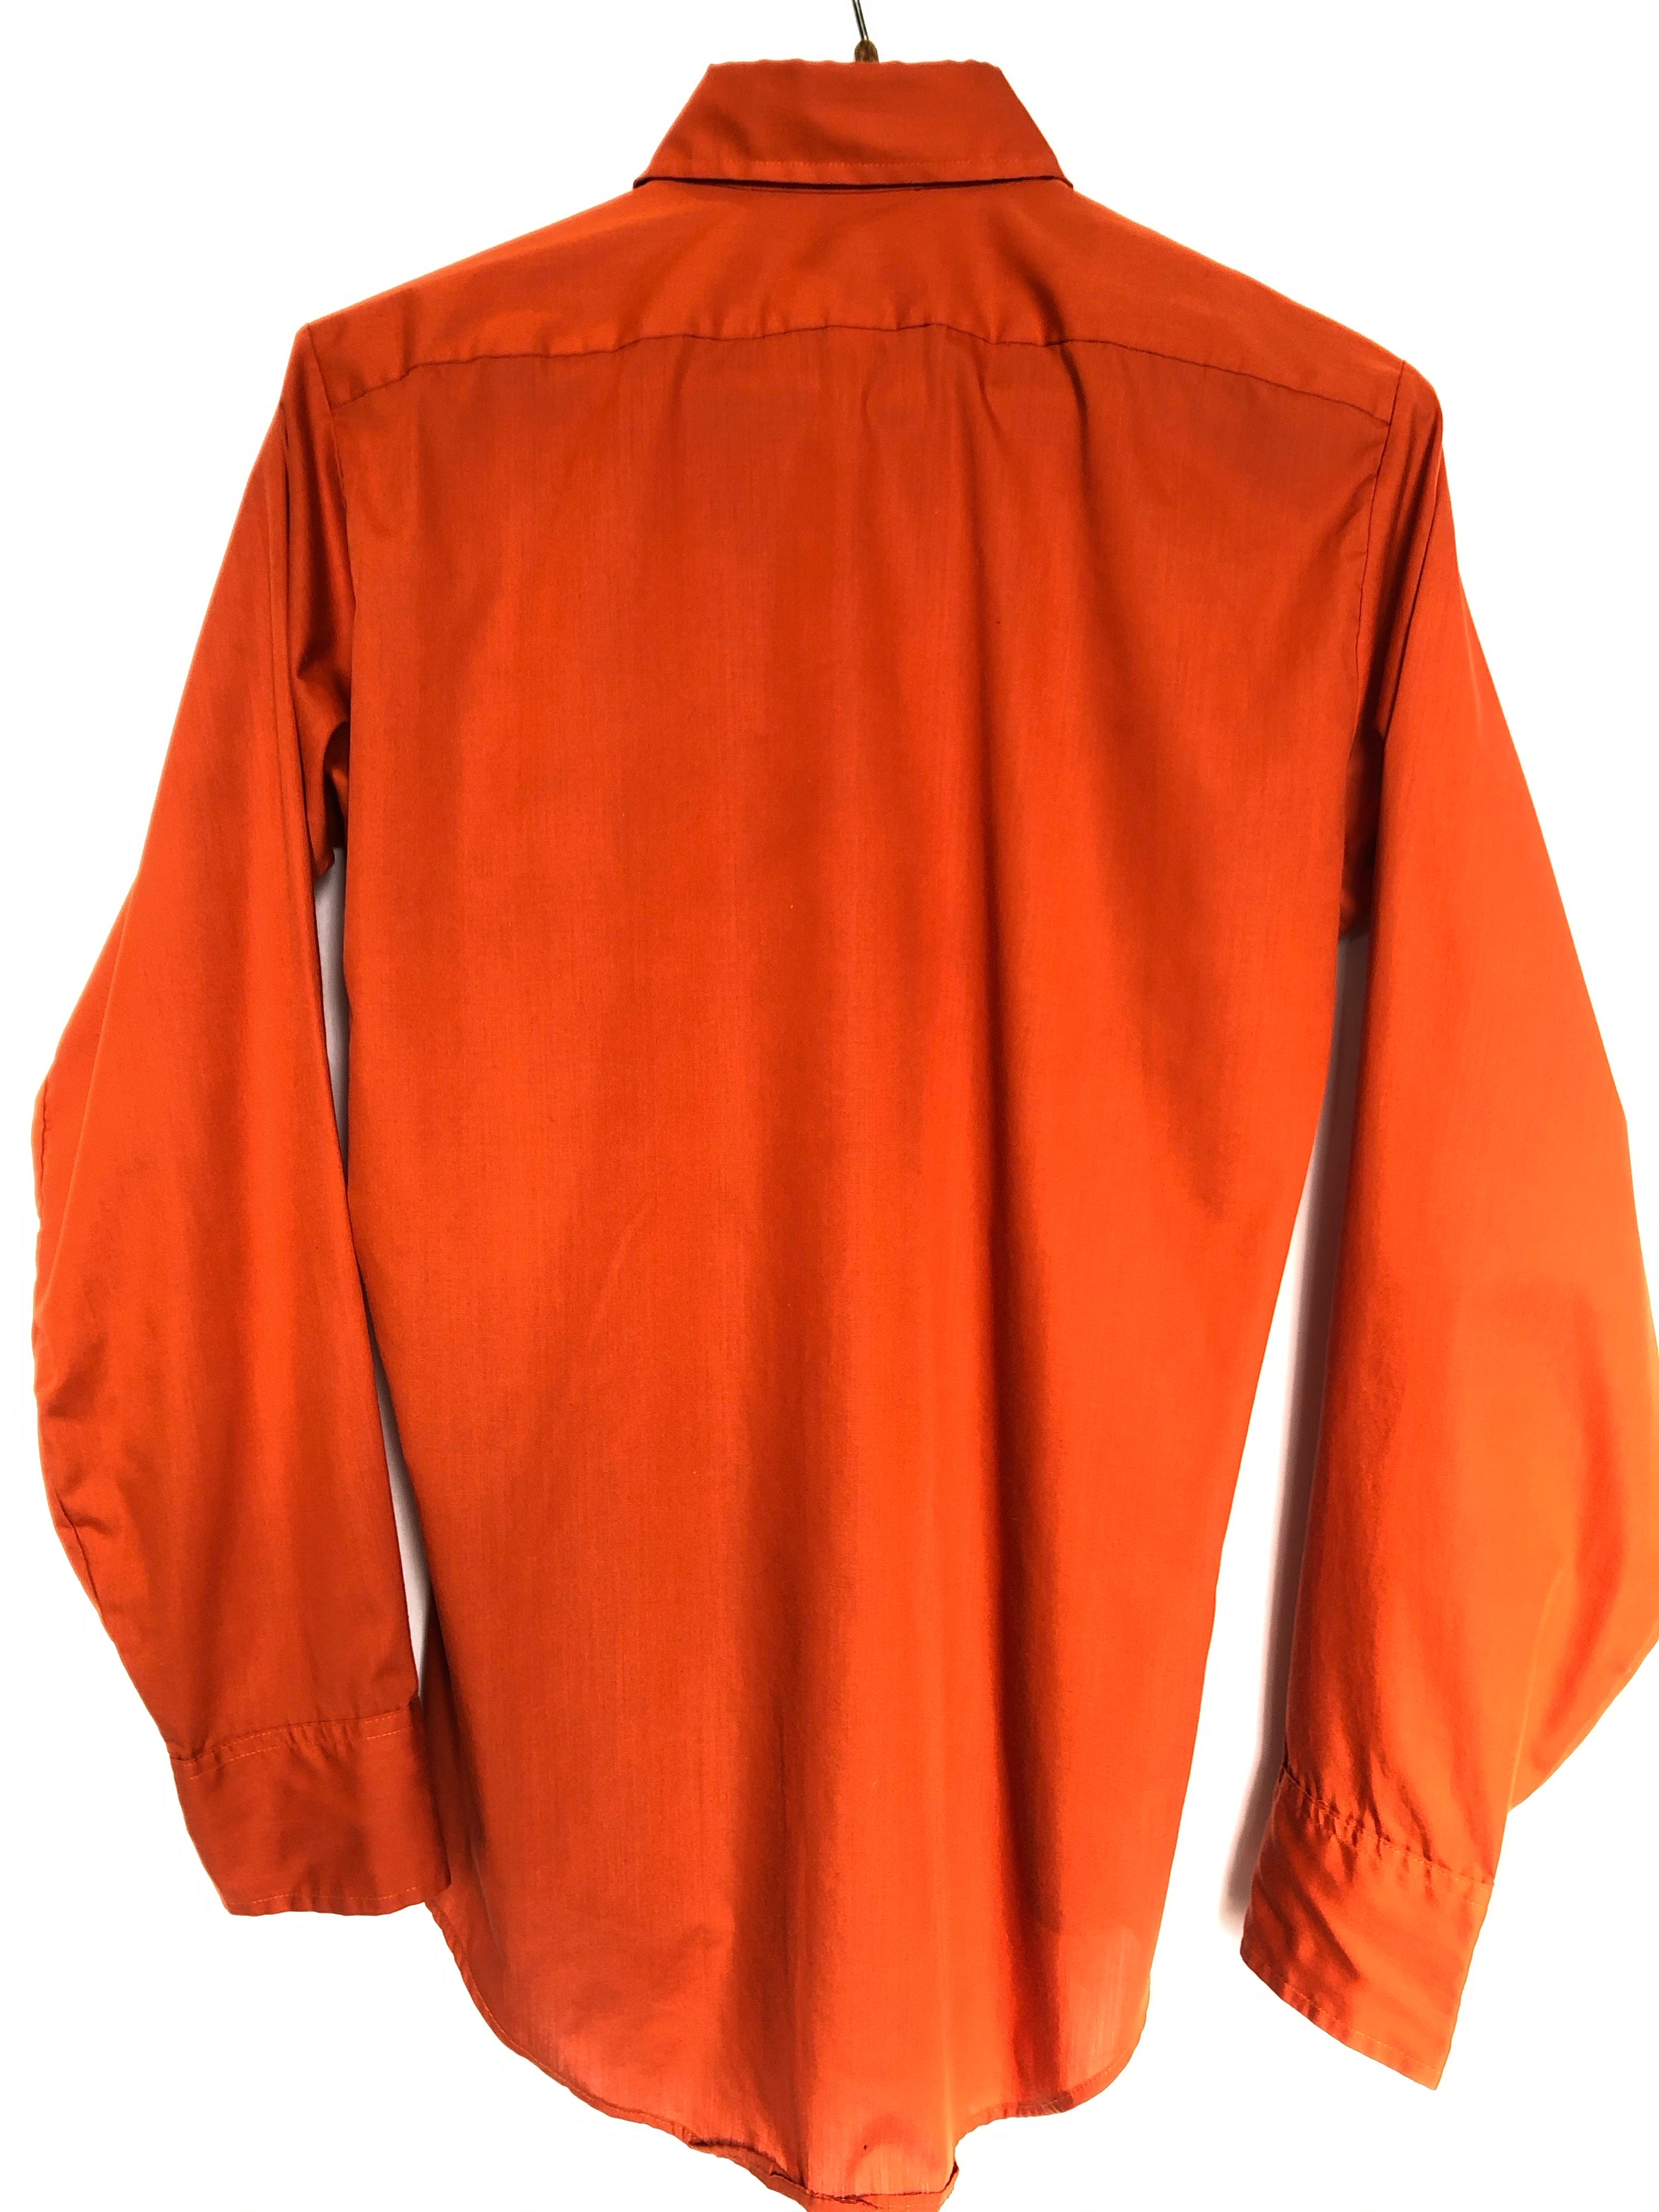 Antigua Detroit Tigers Orange Compression Long Sleeve Dress Shirt, Orange, 70% Cotton / 27% Polyester / 3% SPANDEX, Size XL, Rally House